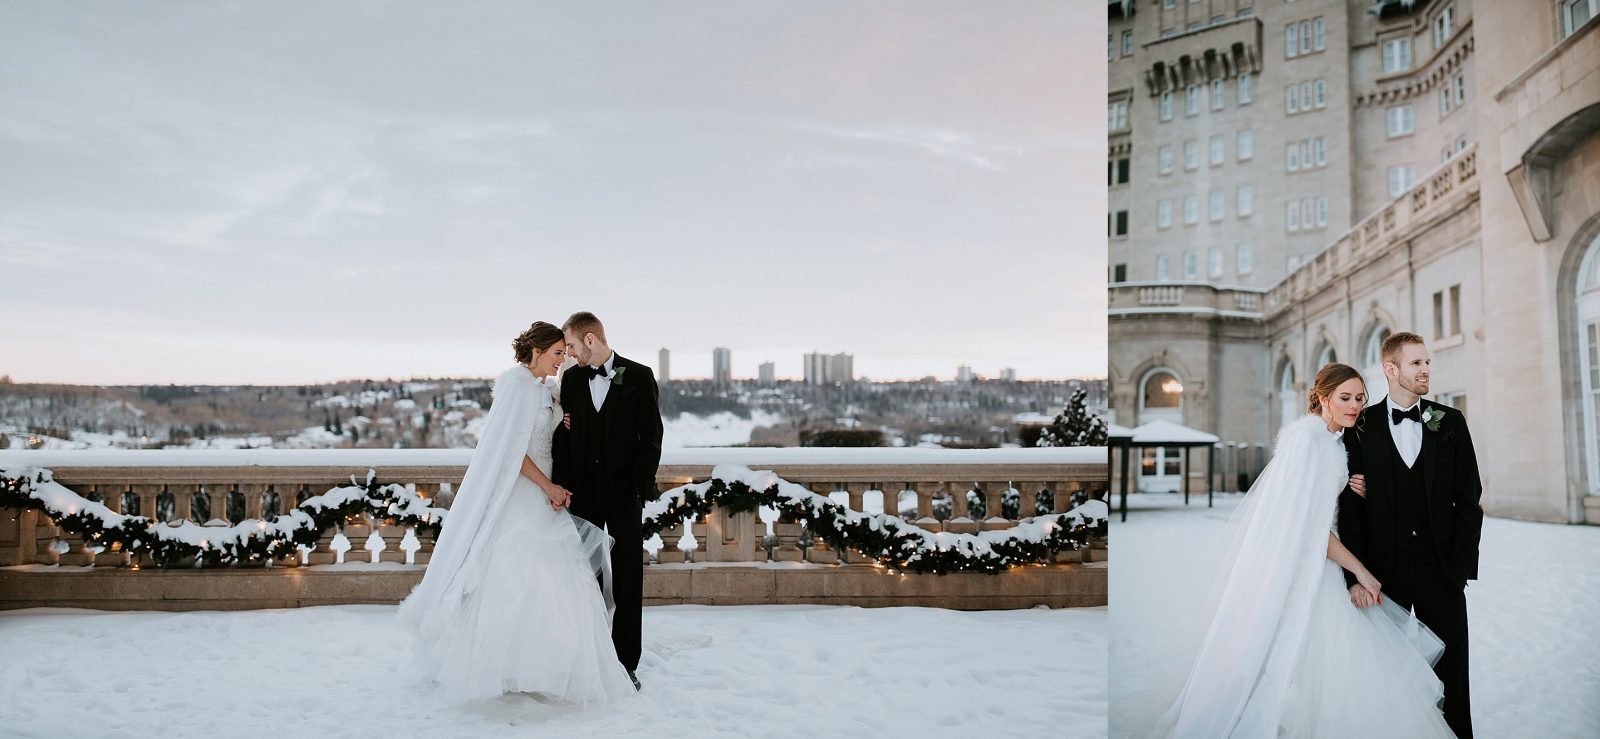 Romantic elegant winter wedding at the Fairmont Hotel Macdonald on New Years Eve in Edmonton